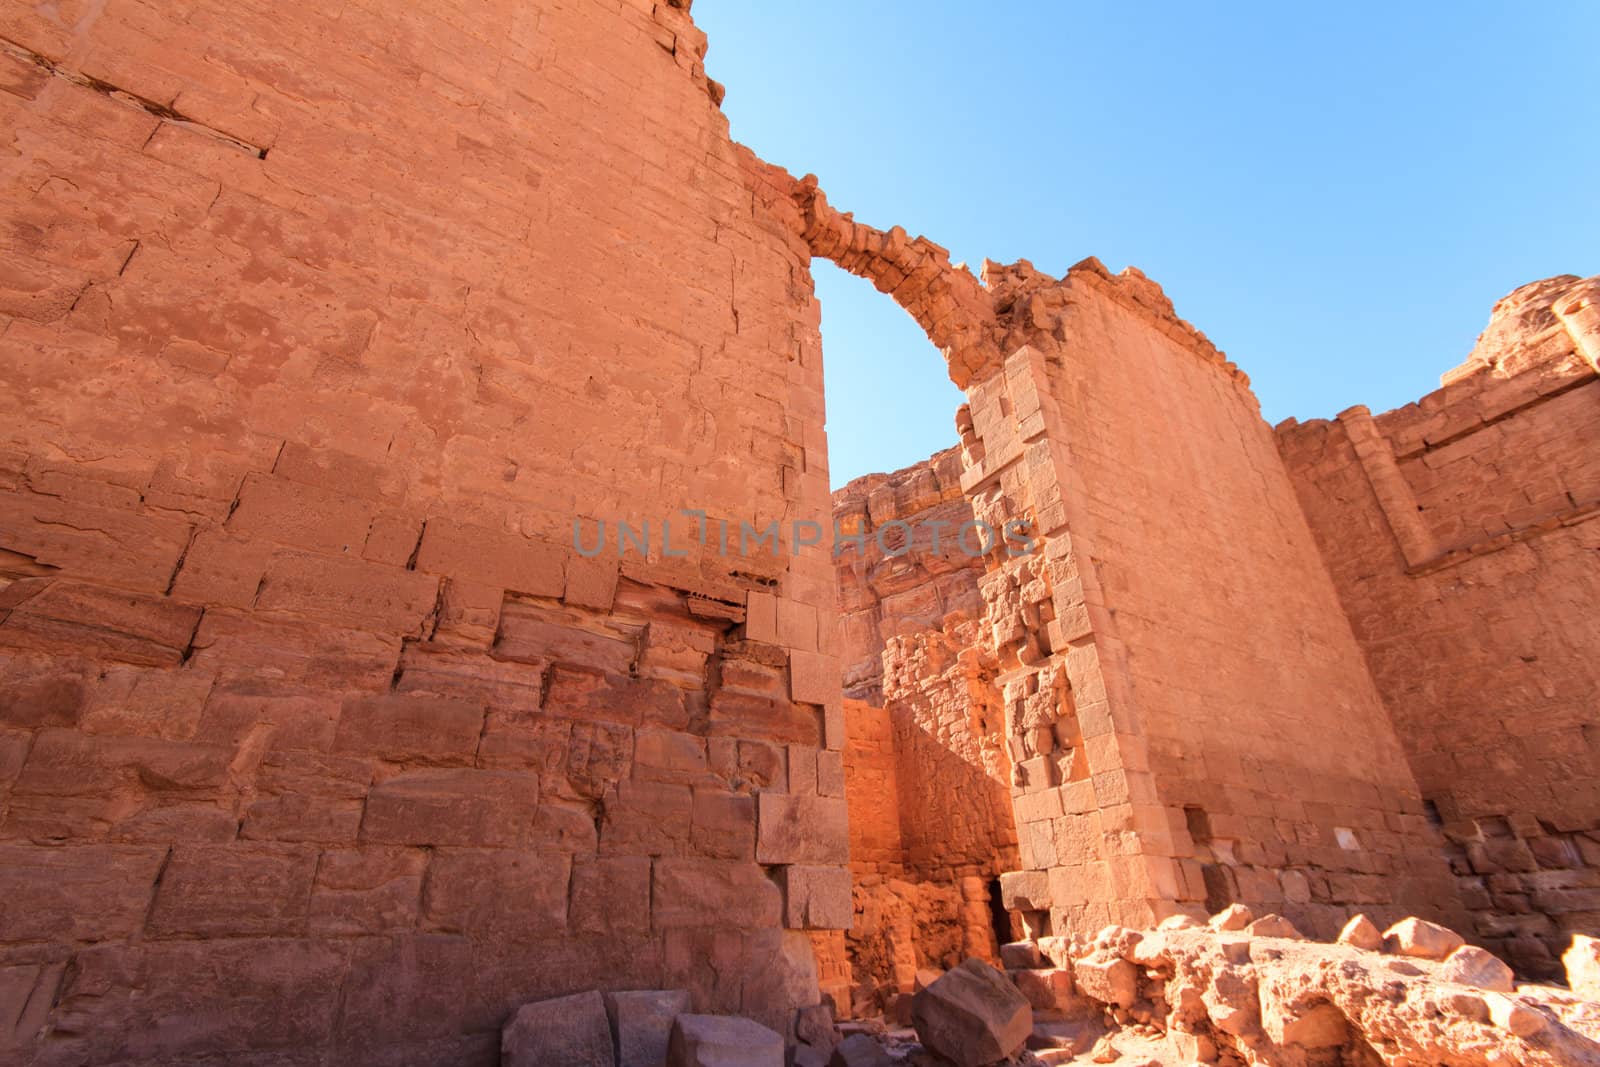 Temenos Gate in Petra, Jordan